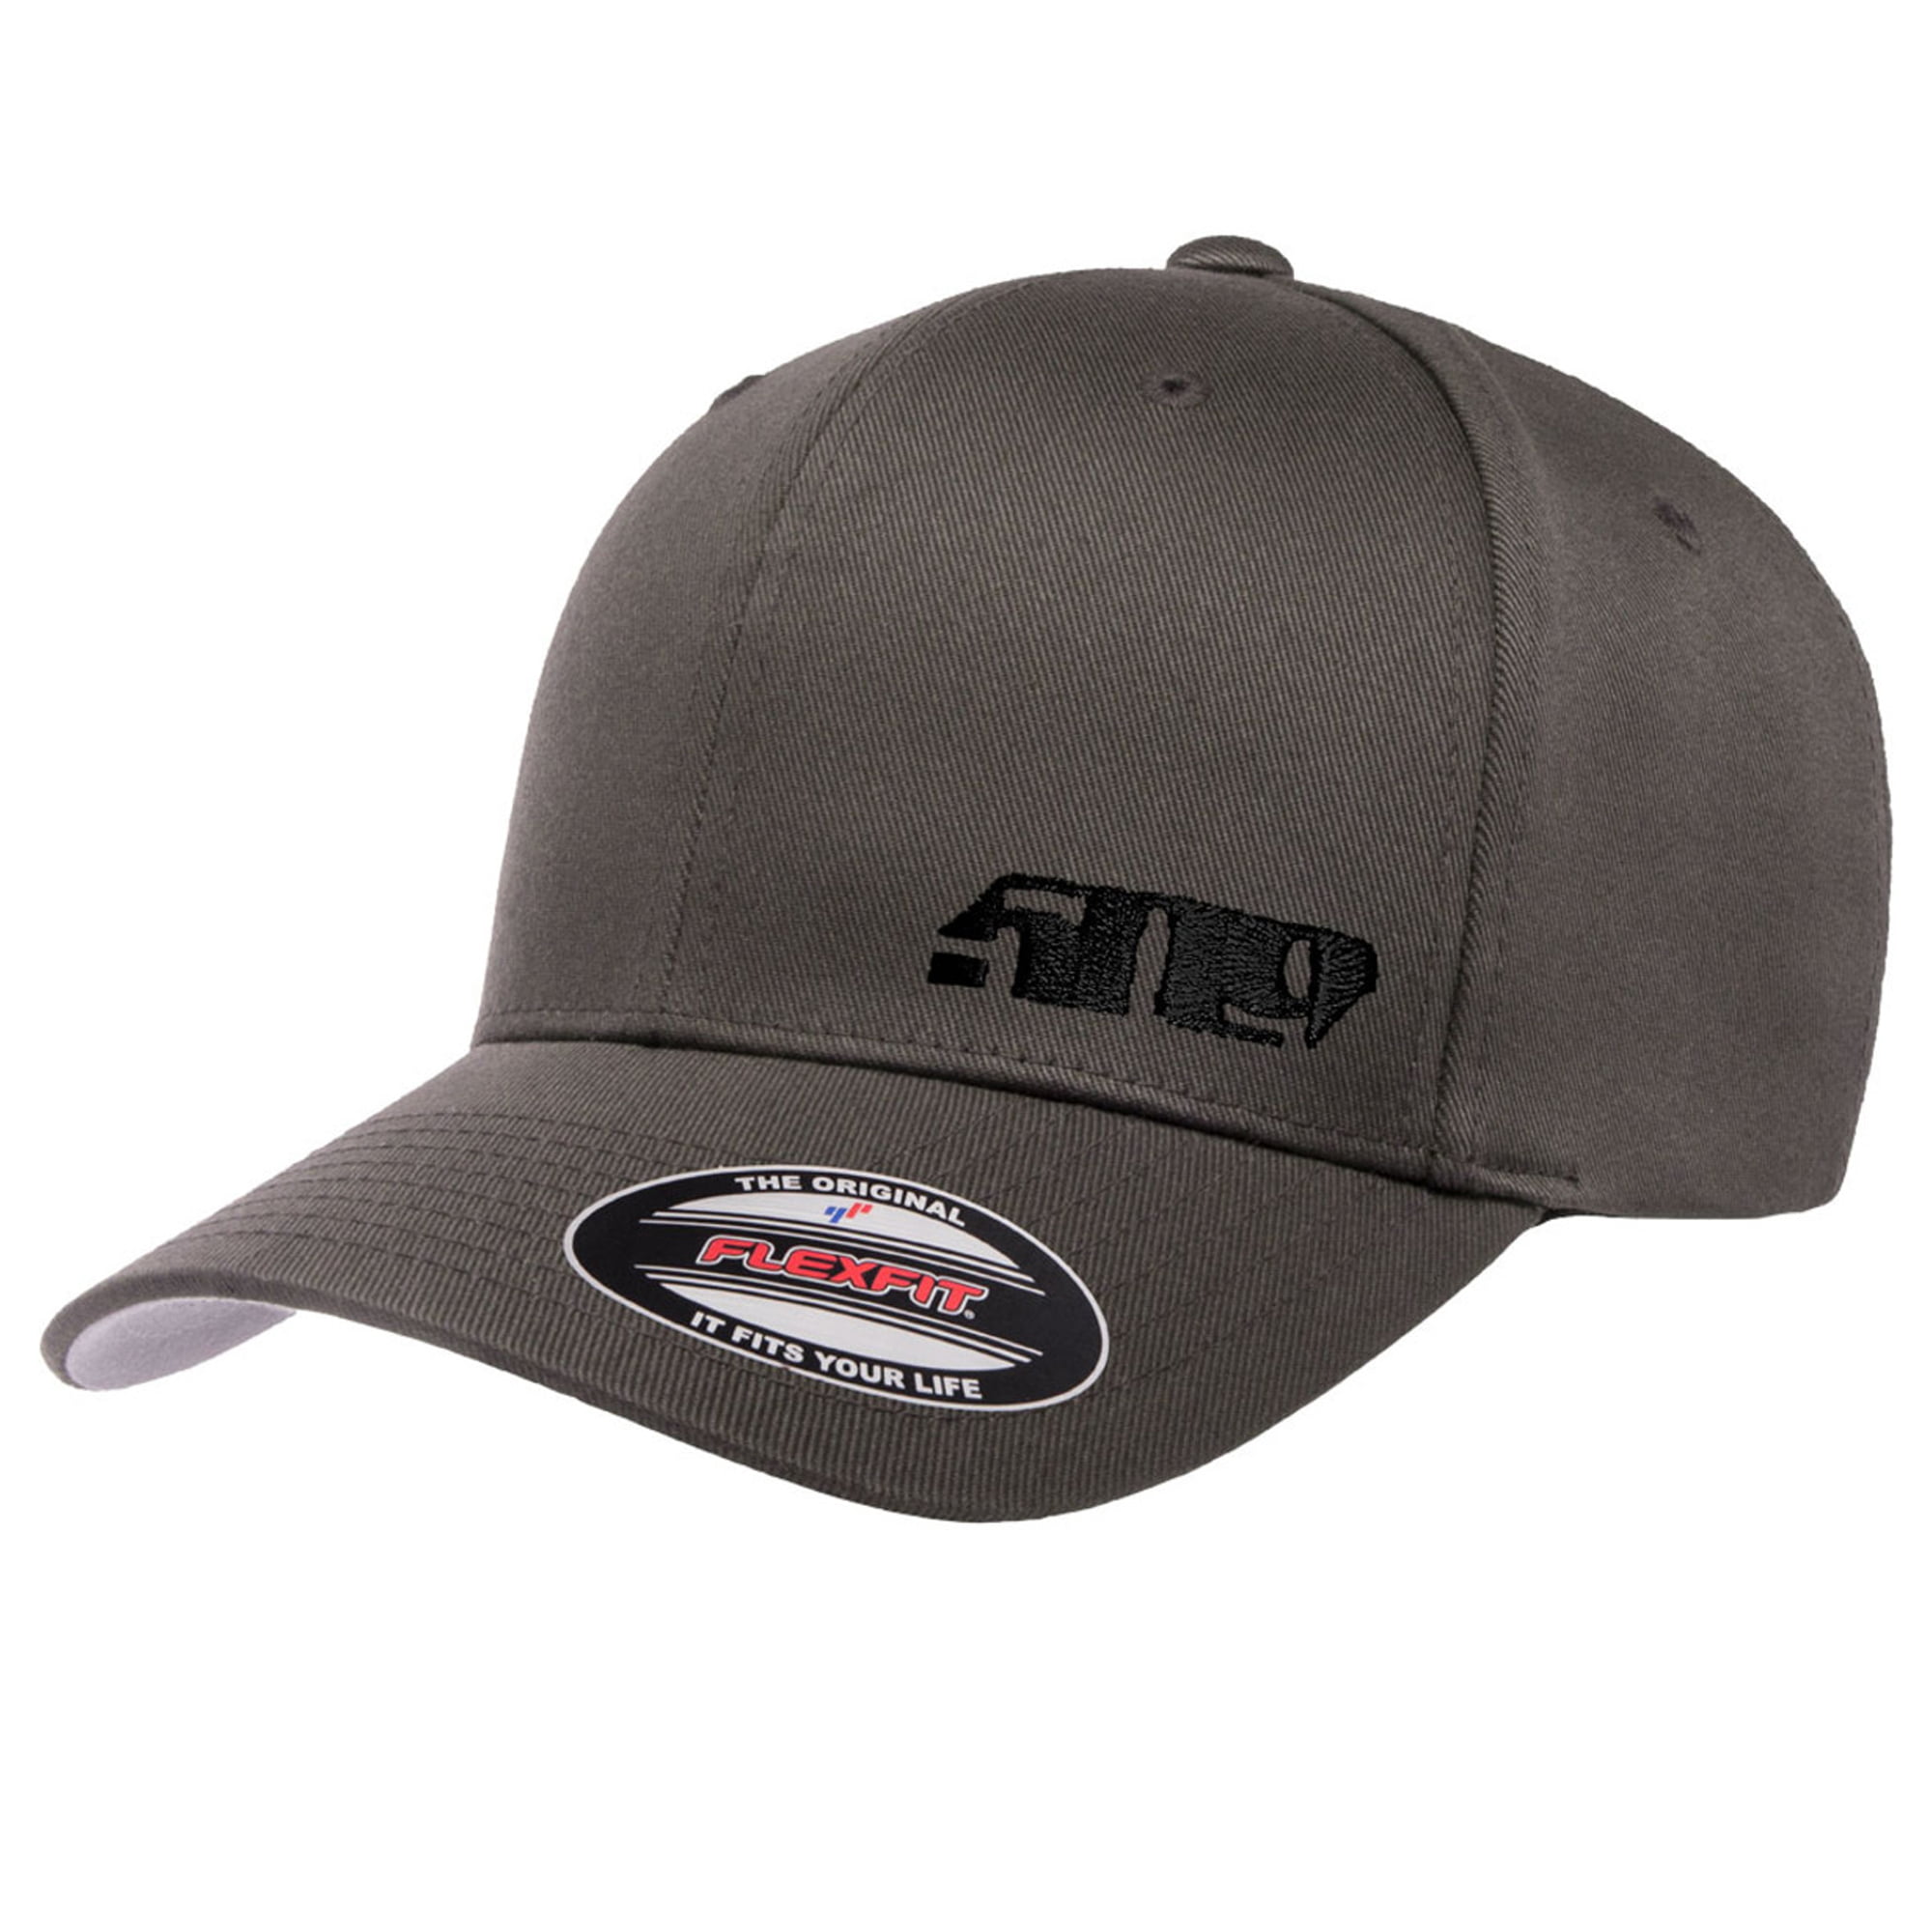 Dark - Legacy Flex Hat - Gray Fit Lg/Xl 509